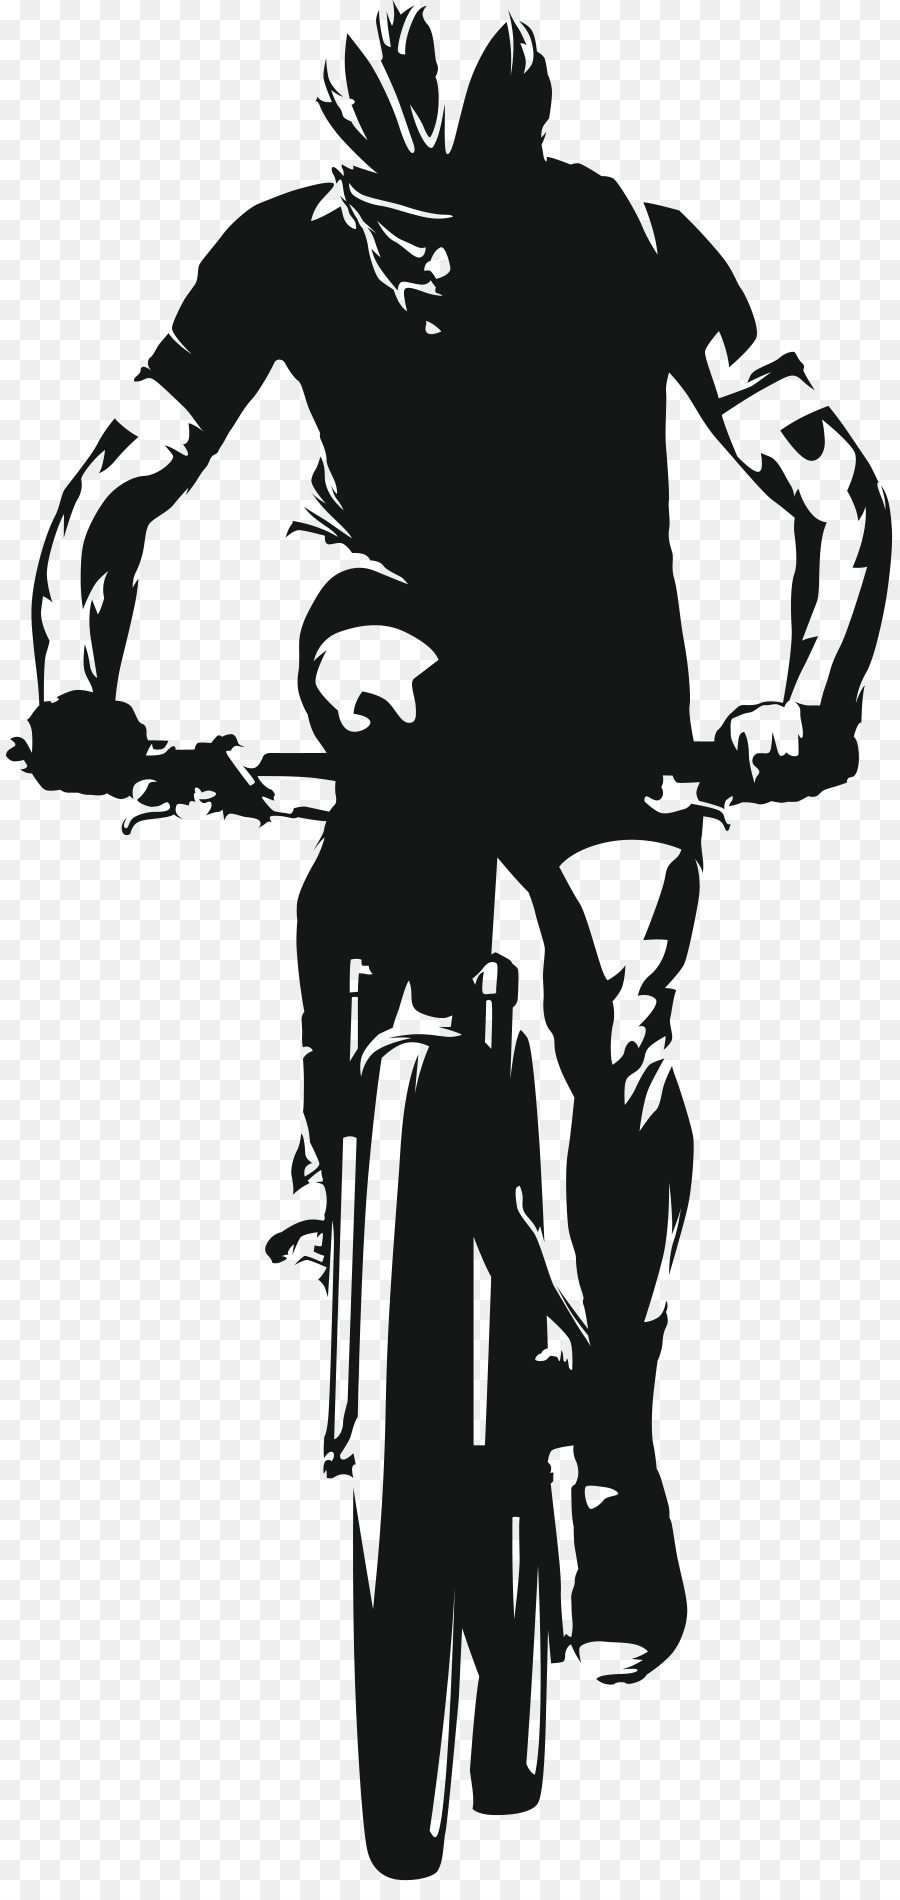 Vector graphics Mountain bike Bicycle Mountain biking Illustration - bicycle png download - 887*1881 - Free Transparent Mountain Bike png Download.